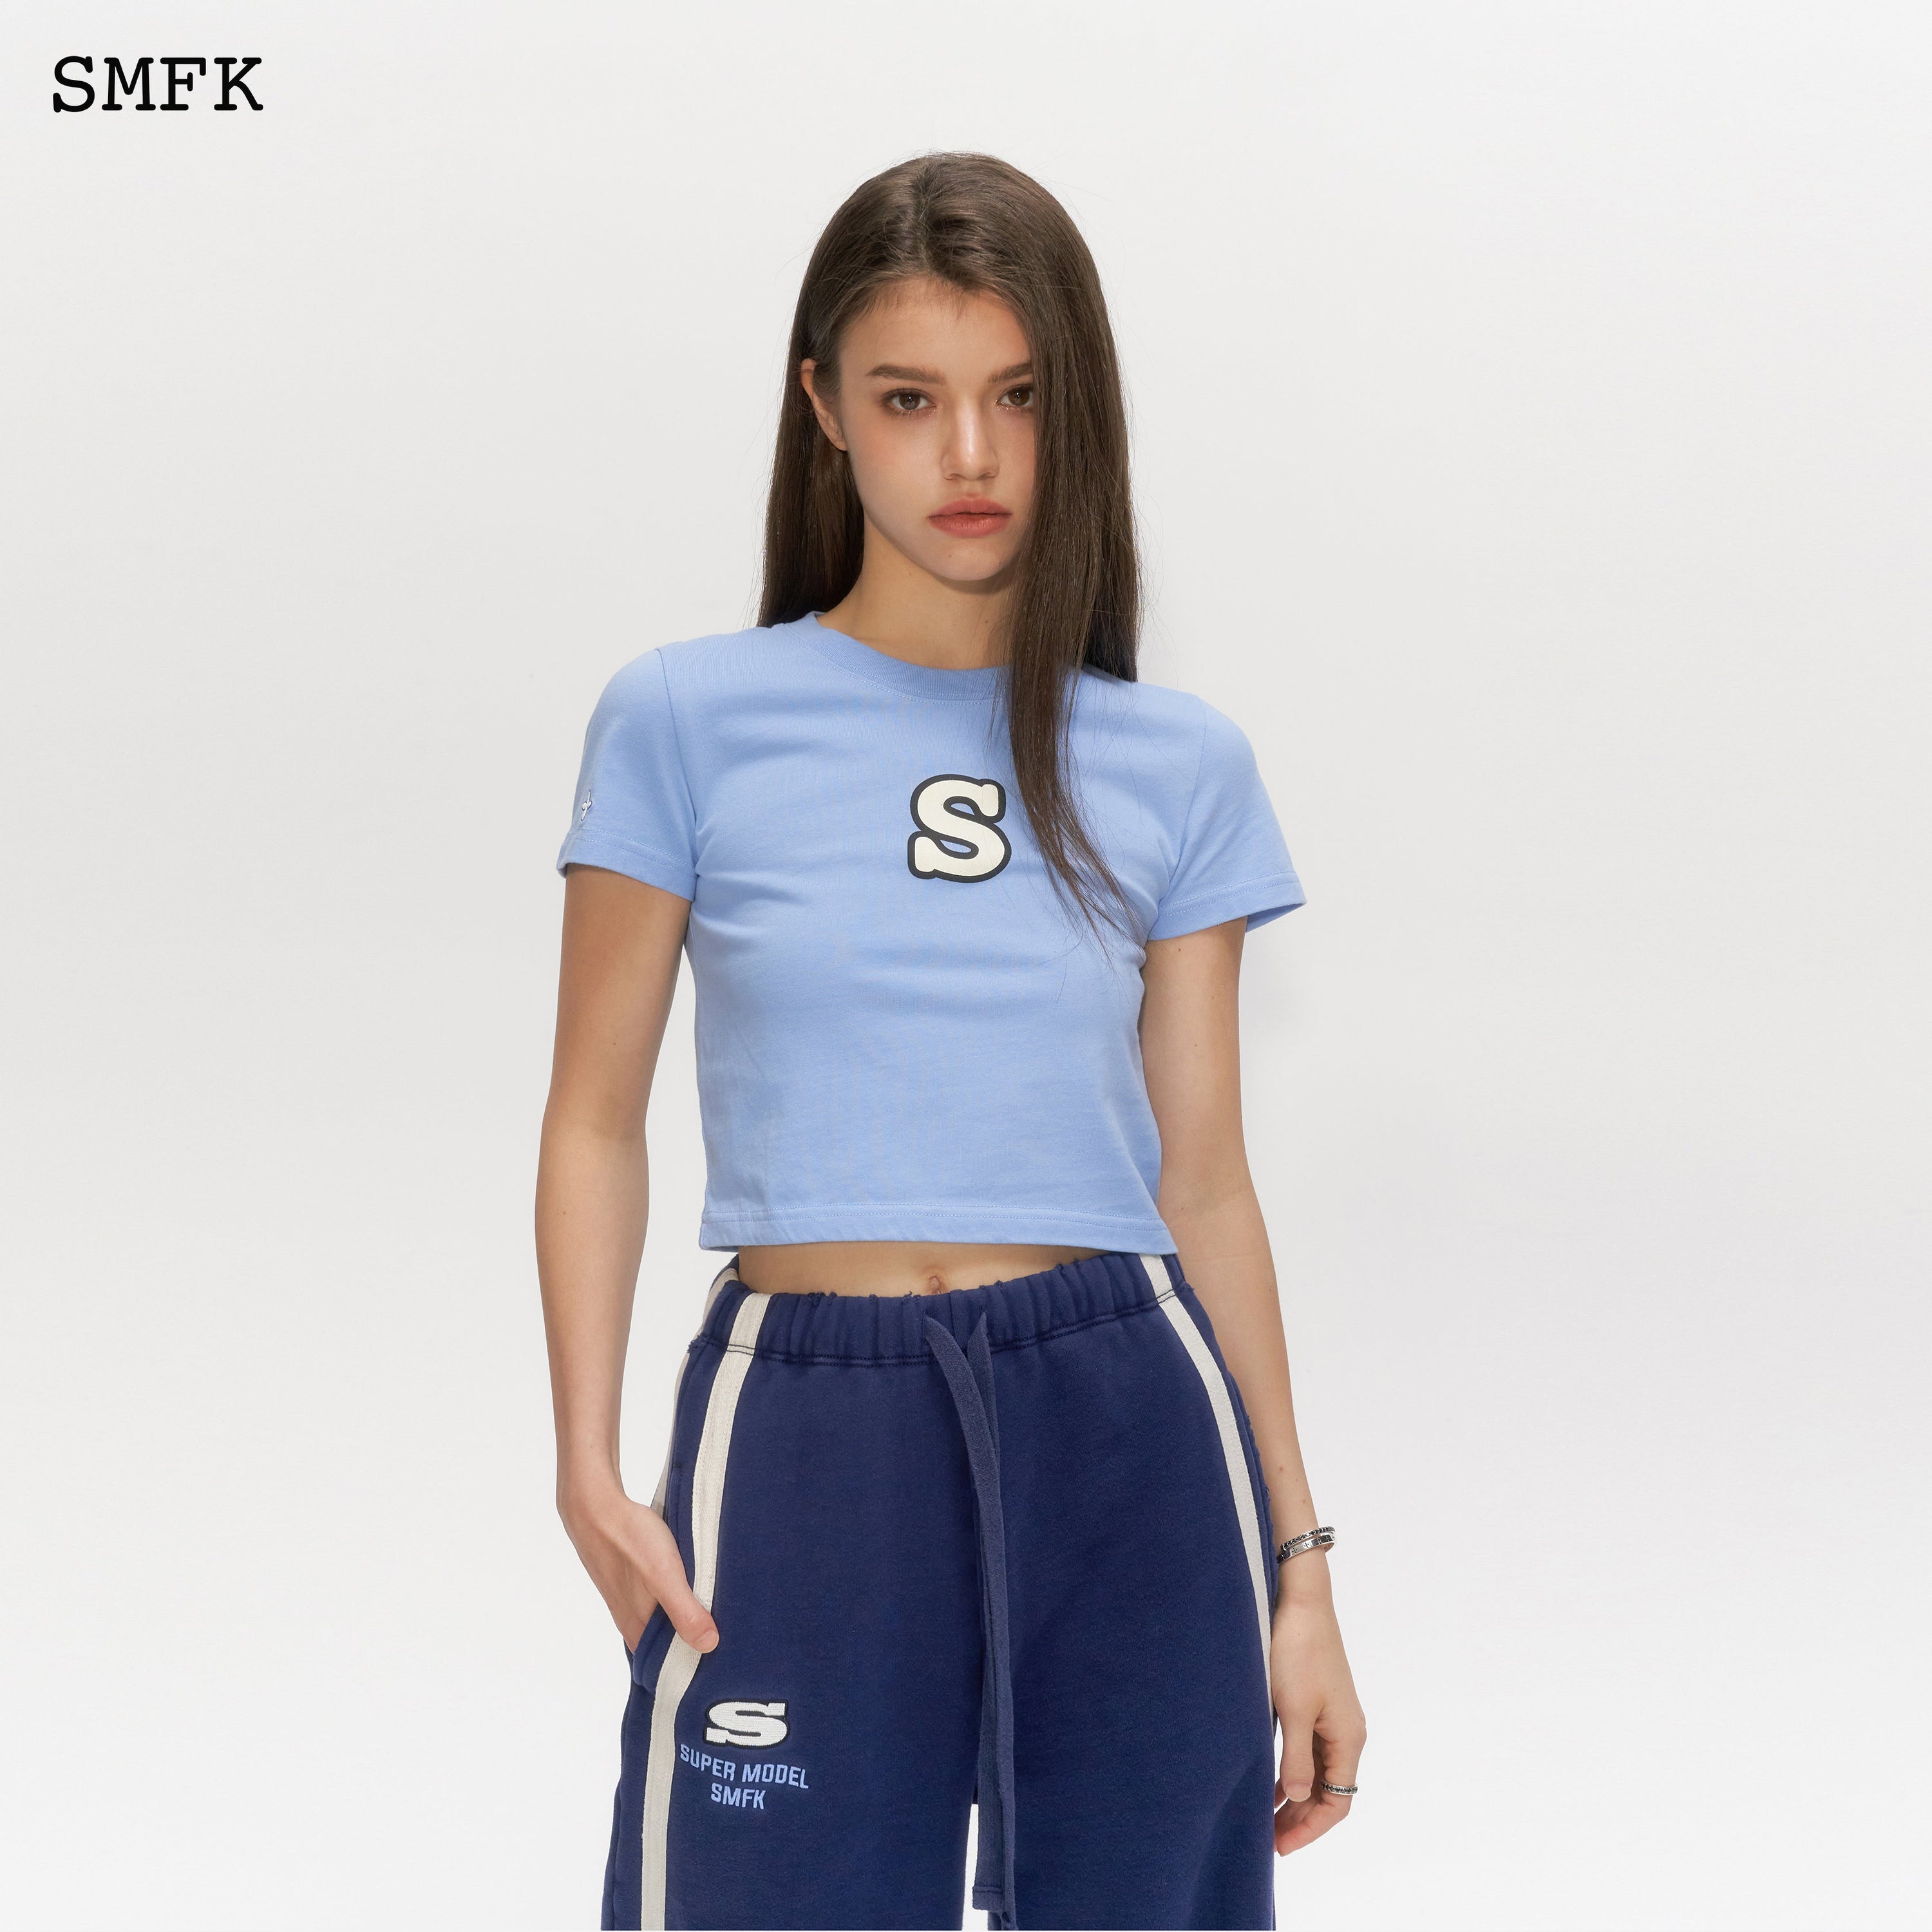 Skinny Model Blue Tight T-shirt - SMFK Official